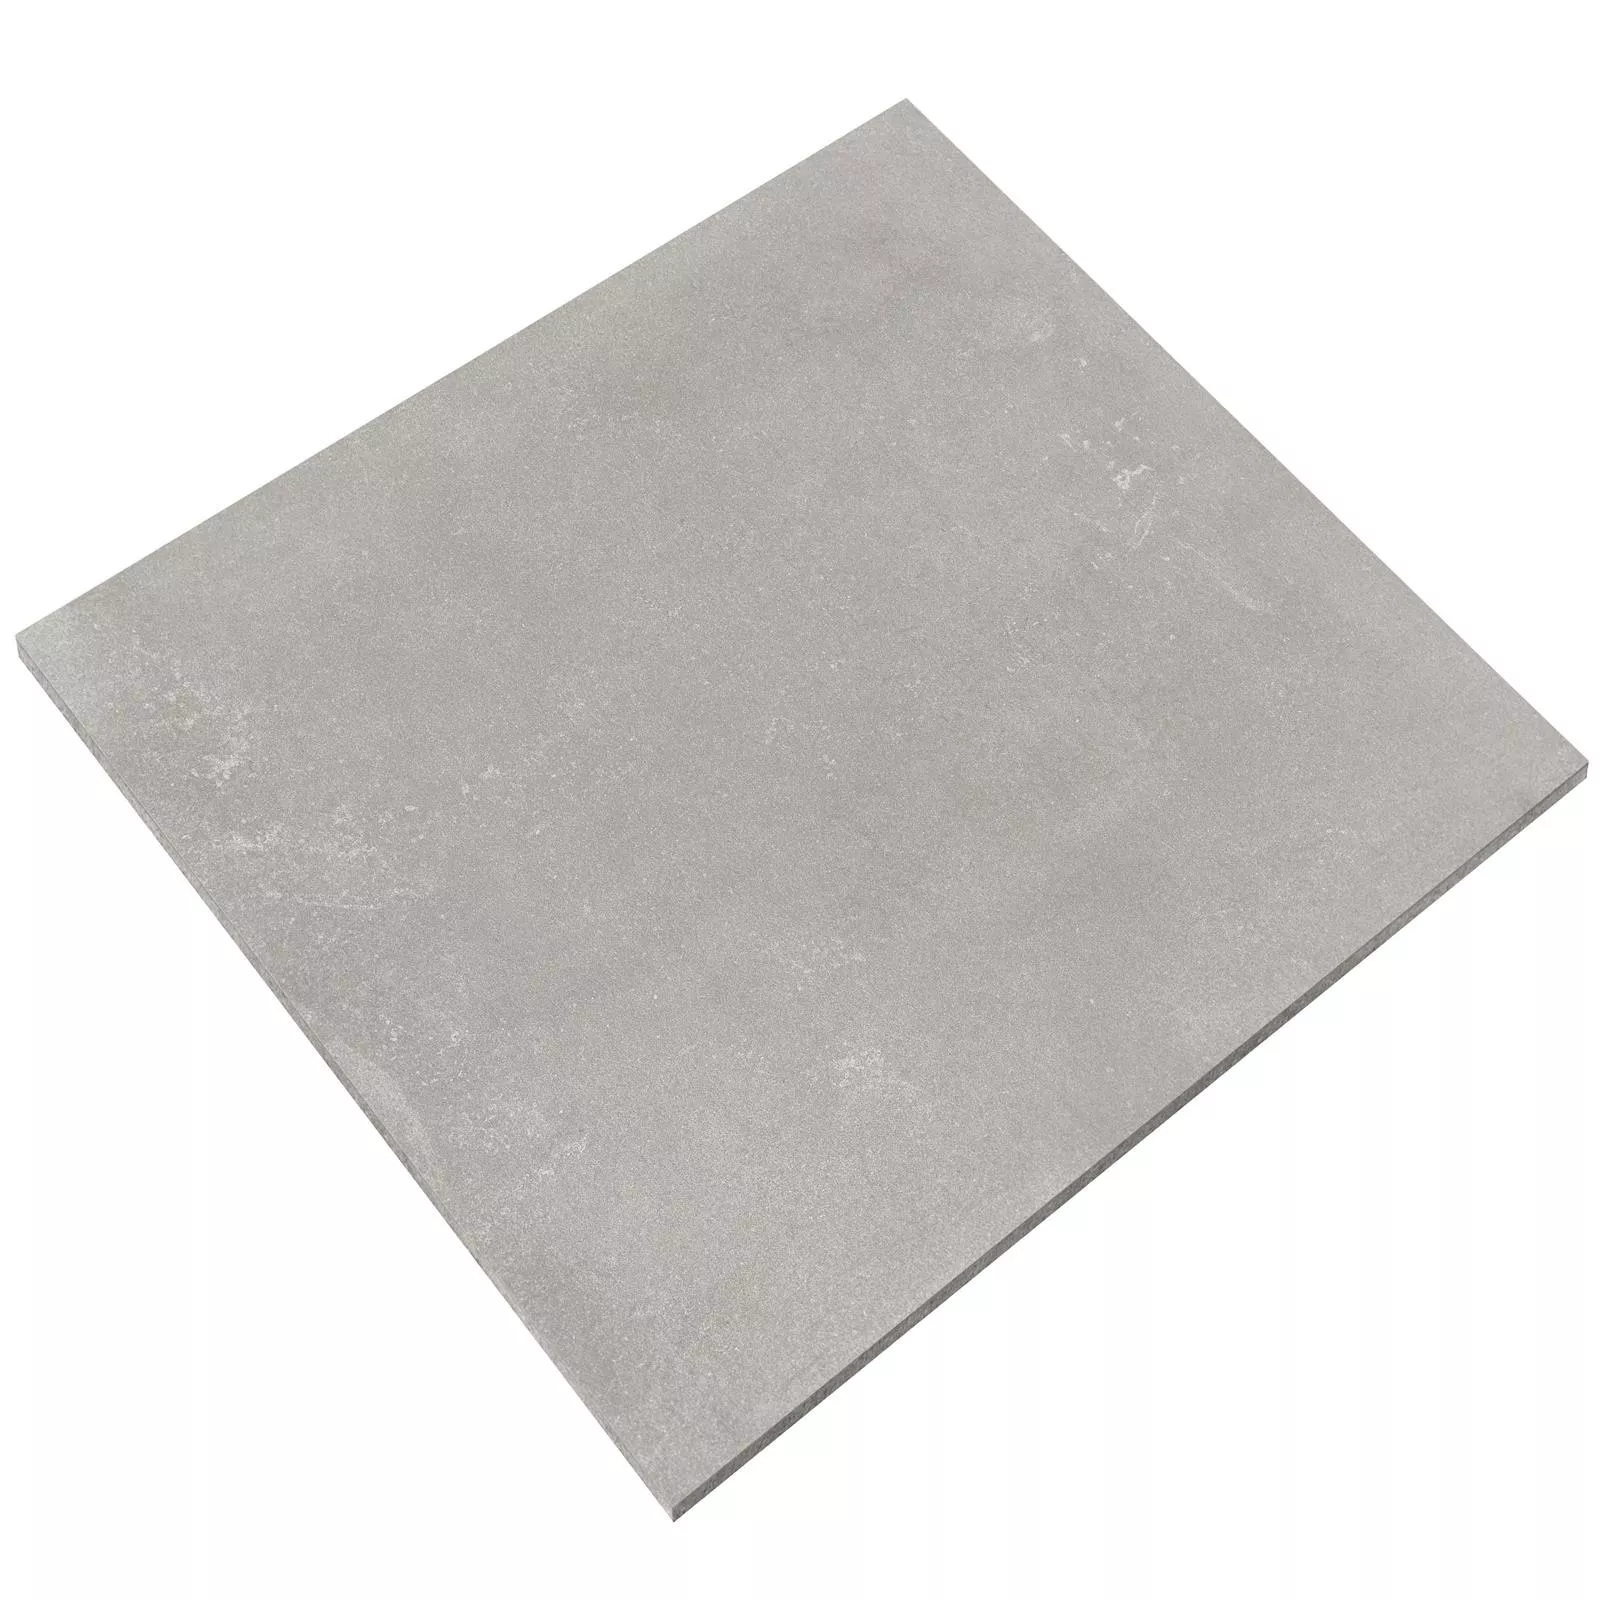 Sample Vloertegels Cement Optic Nepal Slim Grijs 60x60cm